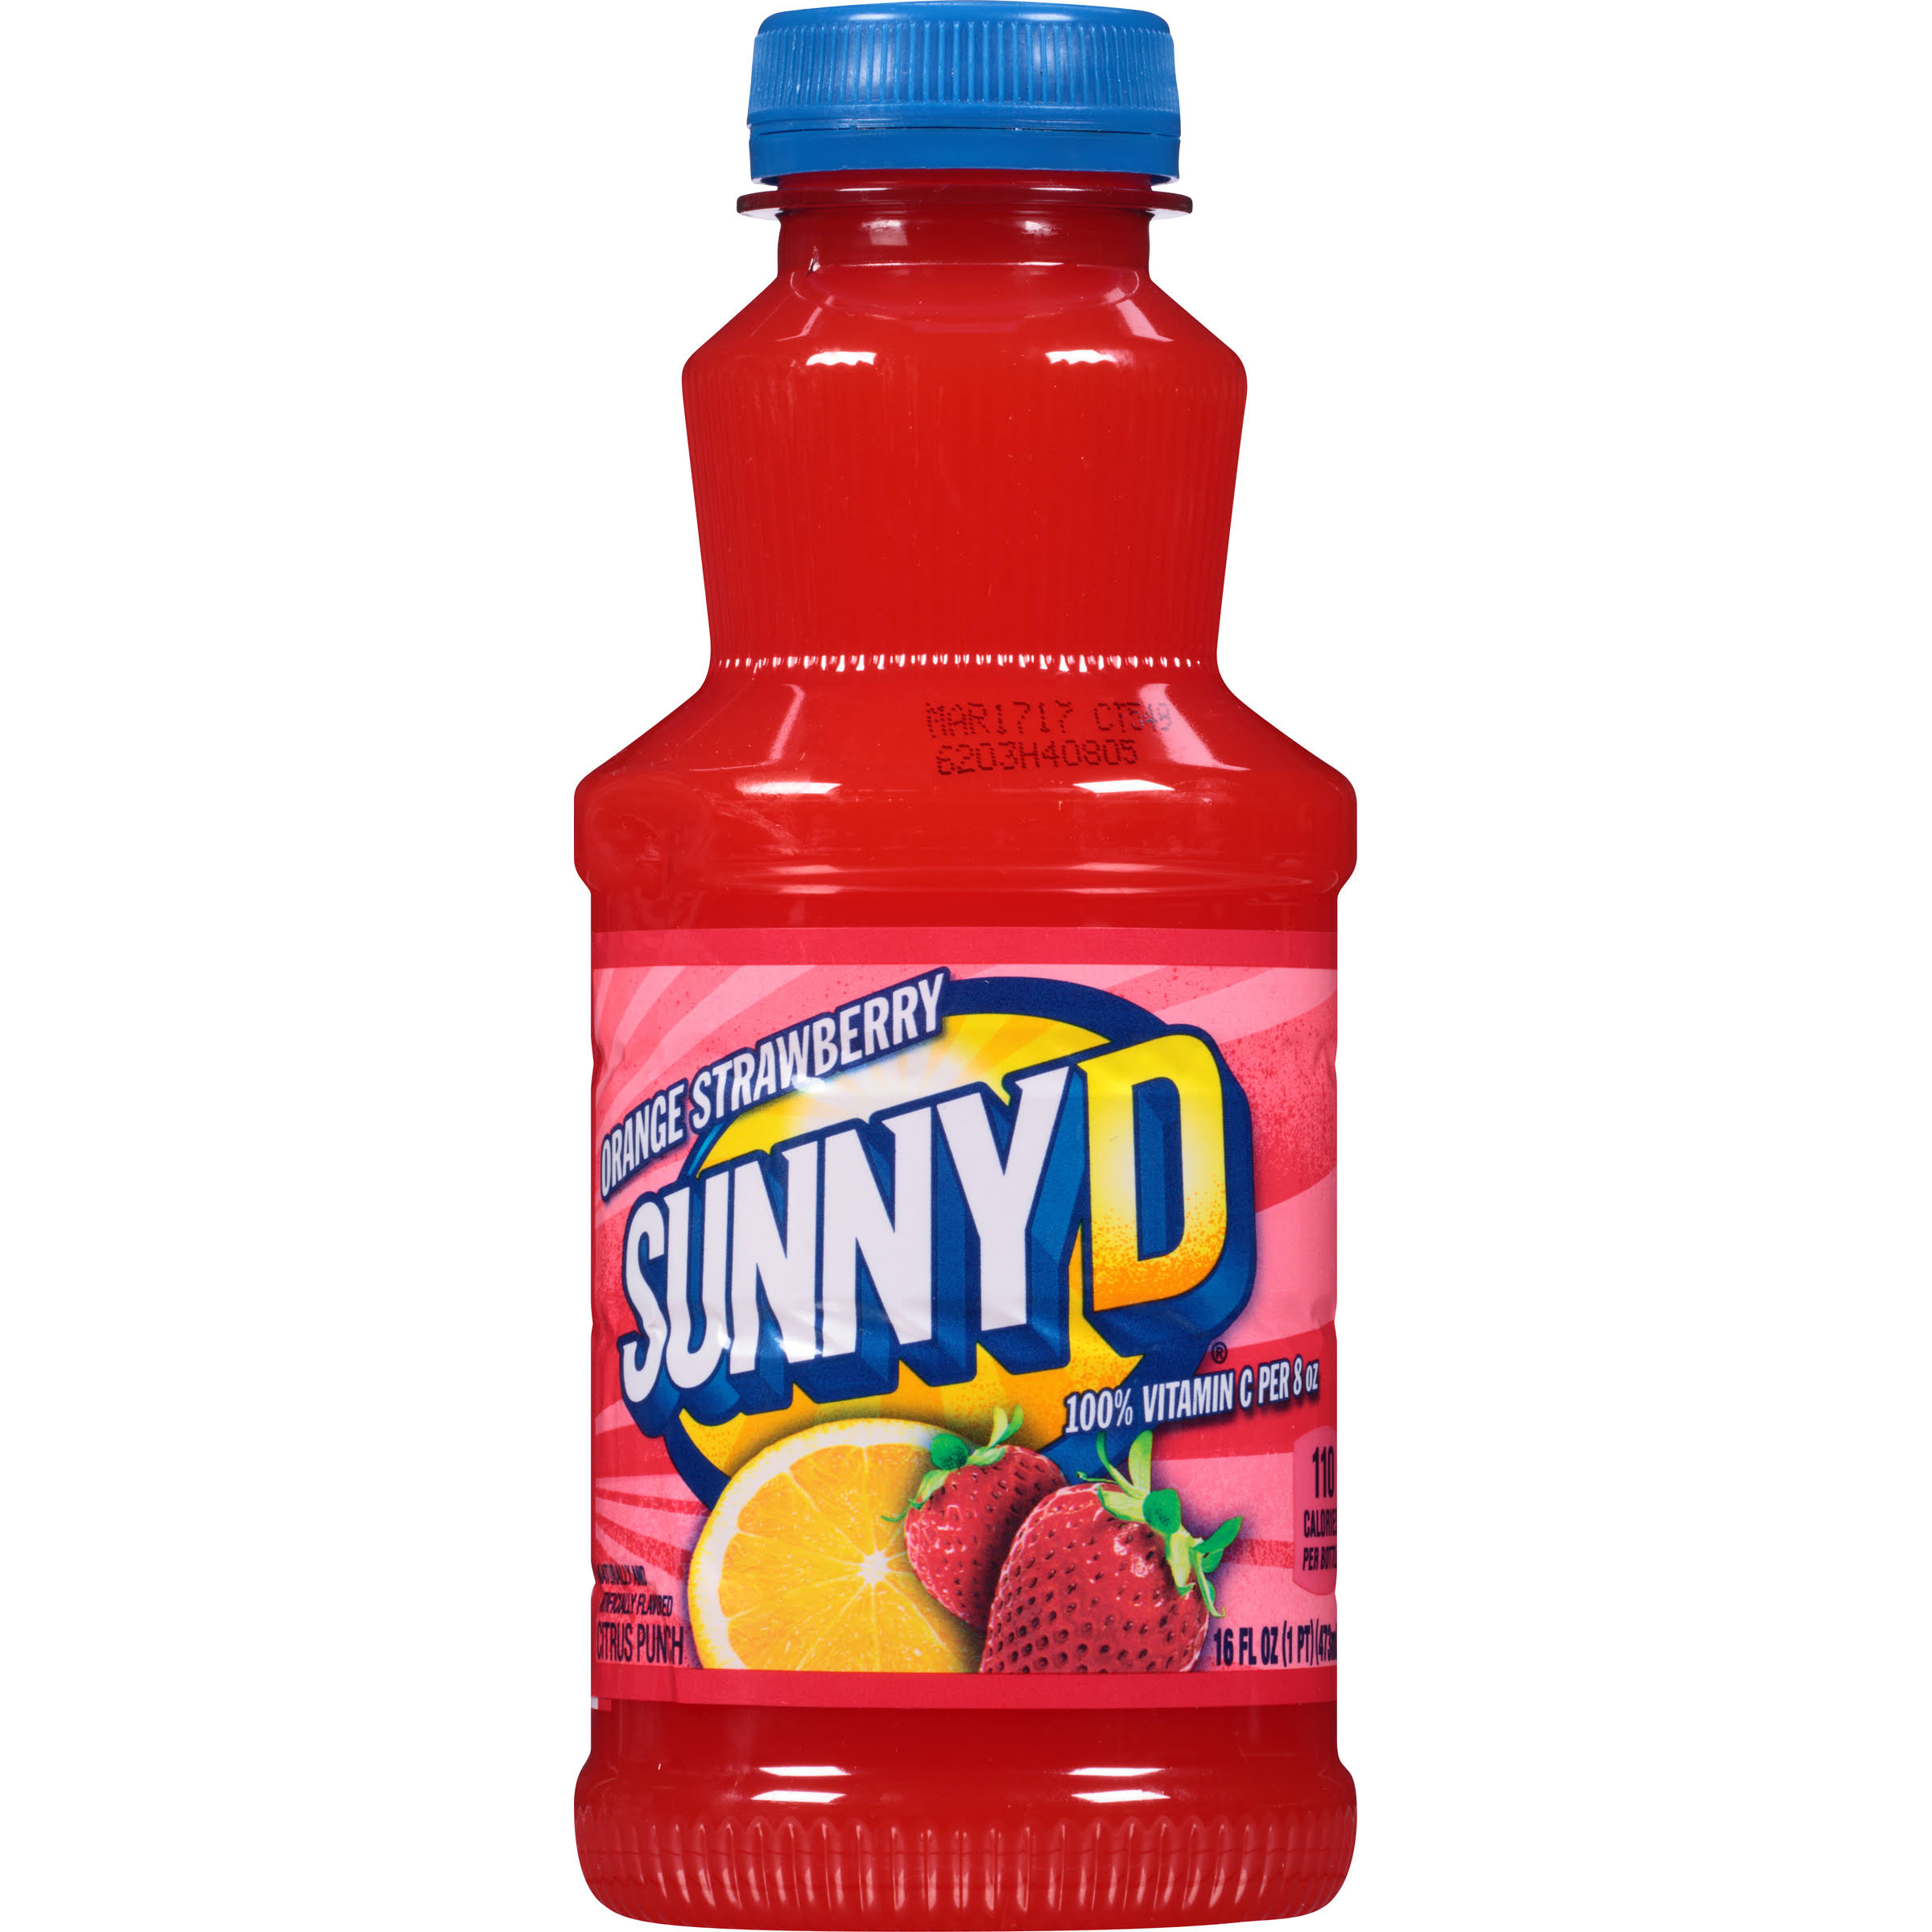 Sunnyd Citrus Punch - Orange Strawberry, 16oz